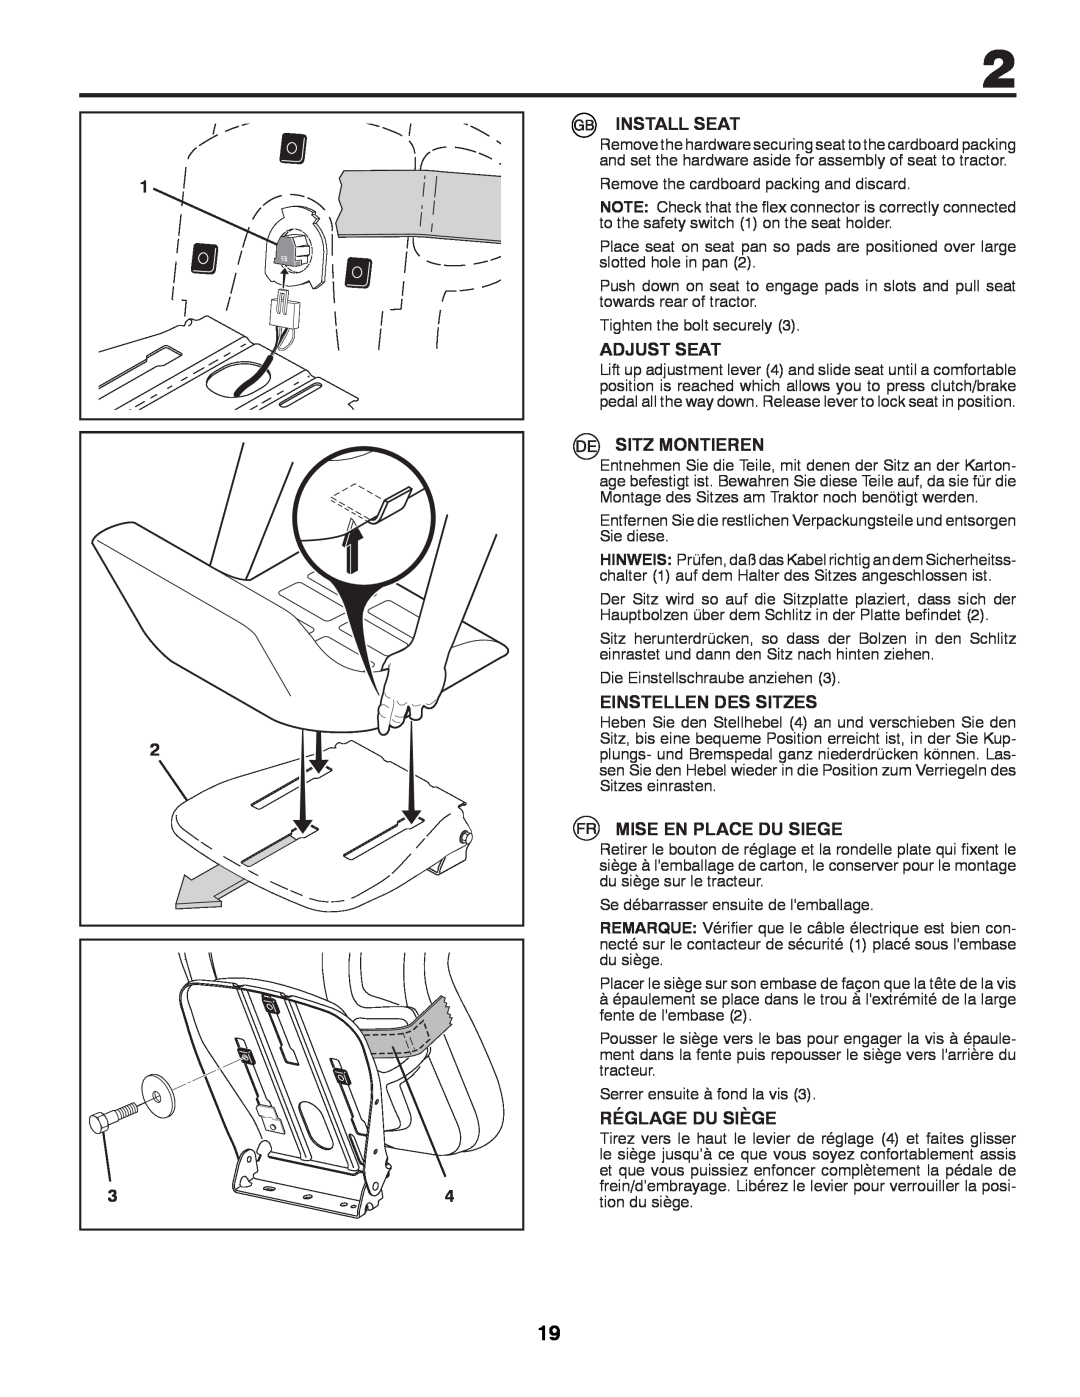 McCulloch 532 43 42-91 Rev. 1 instruction manual Install Seat 